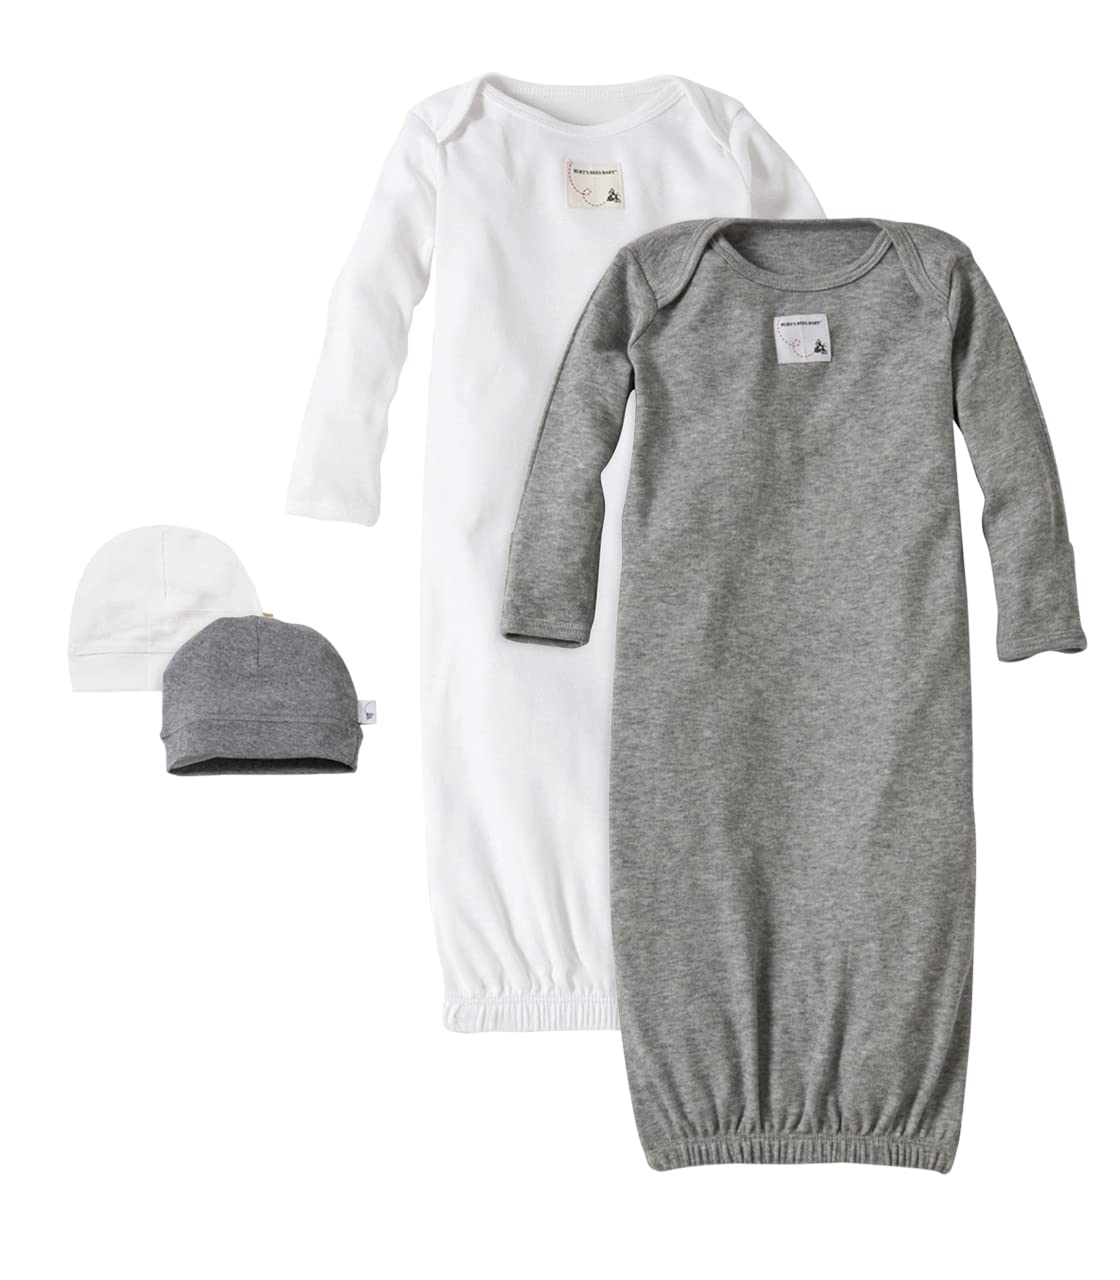 Burt's Bees Baby Unisex Baby Gift Set - Baby Sleeper Gowns, Hats, Reversible Quilt & Plush Toy, 100% Organic Cotton Essentials Bundle